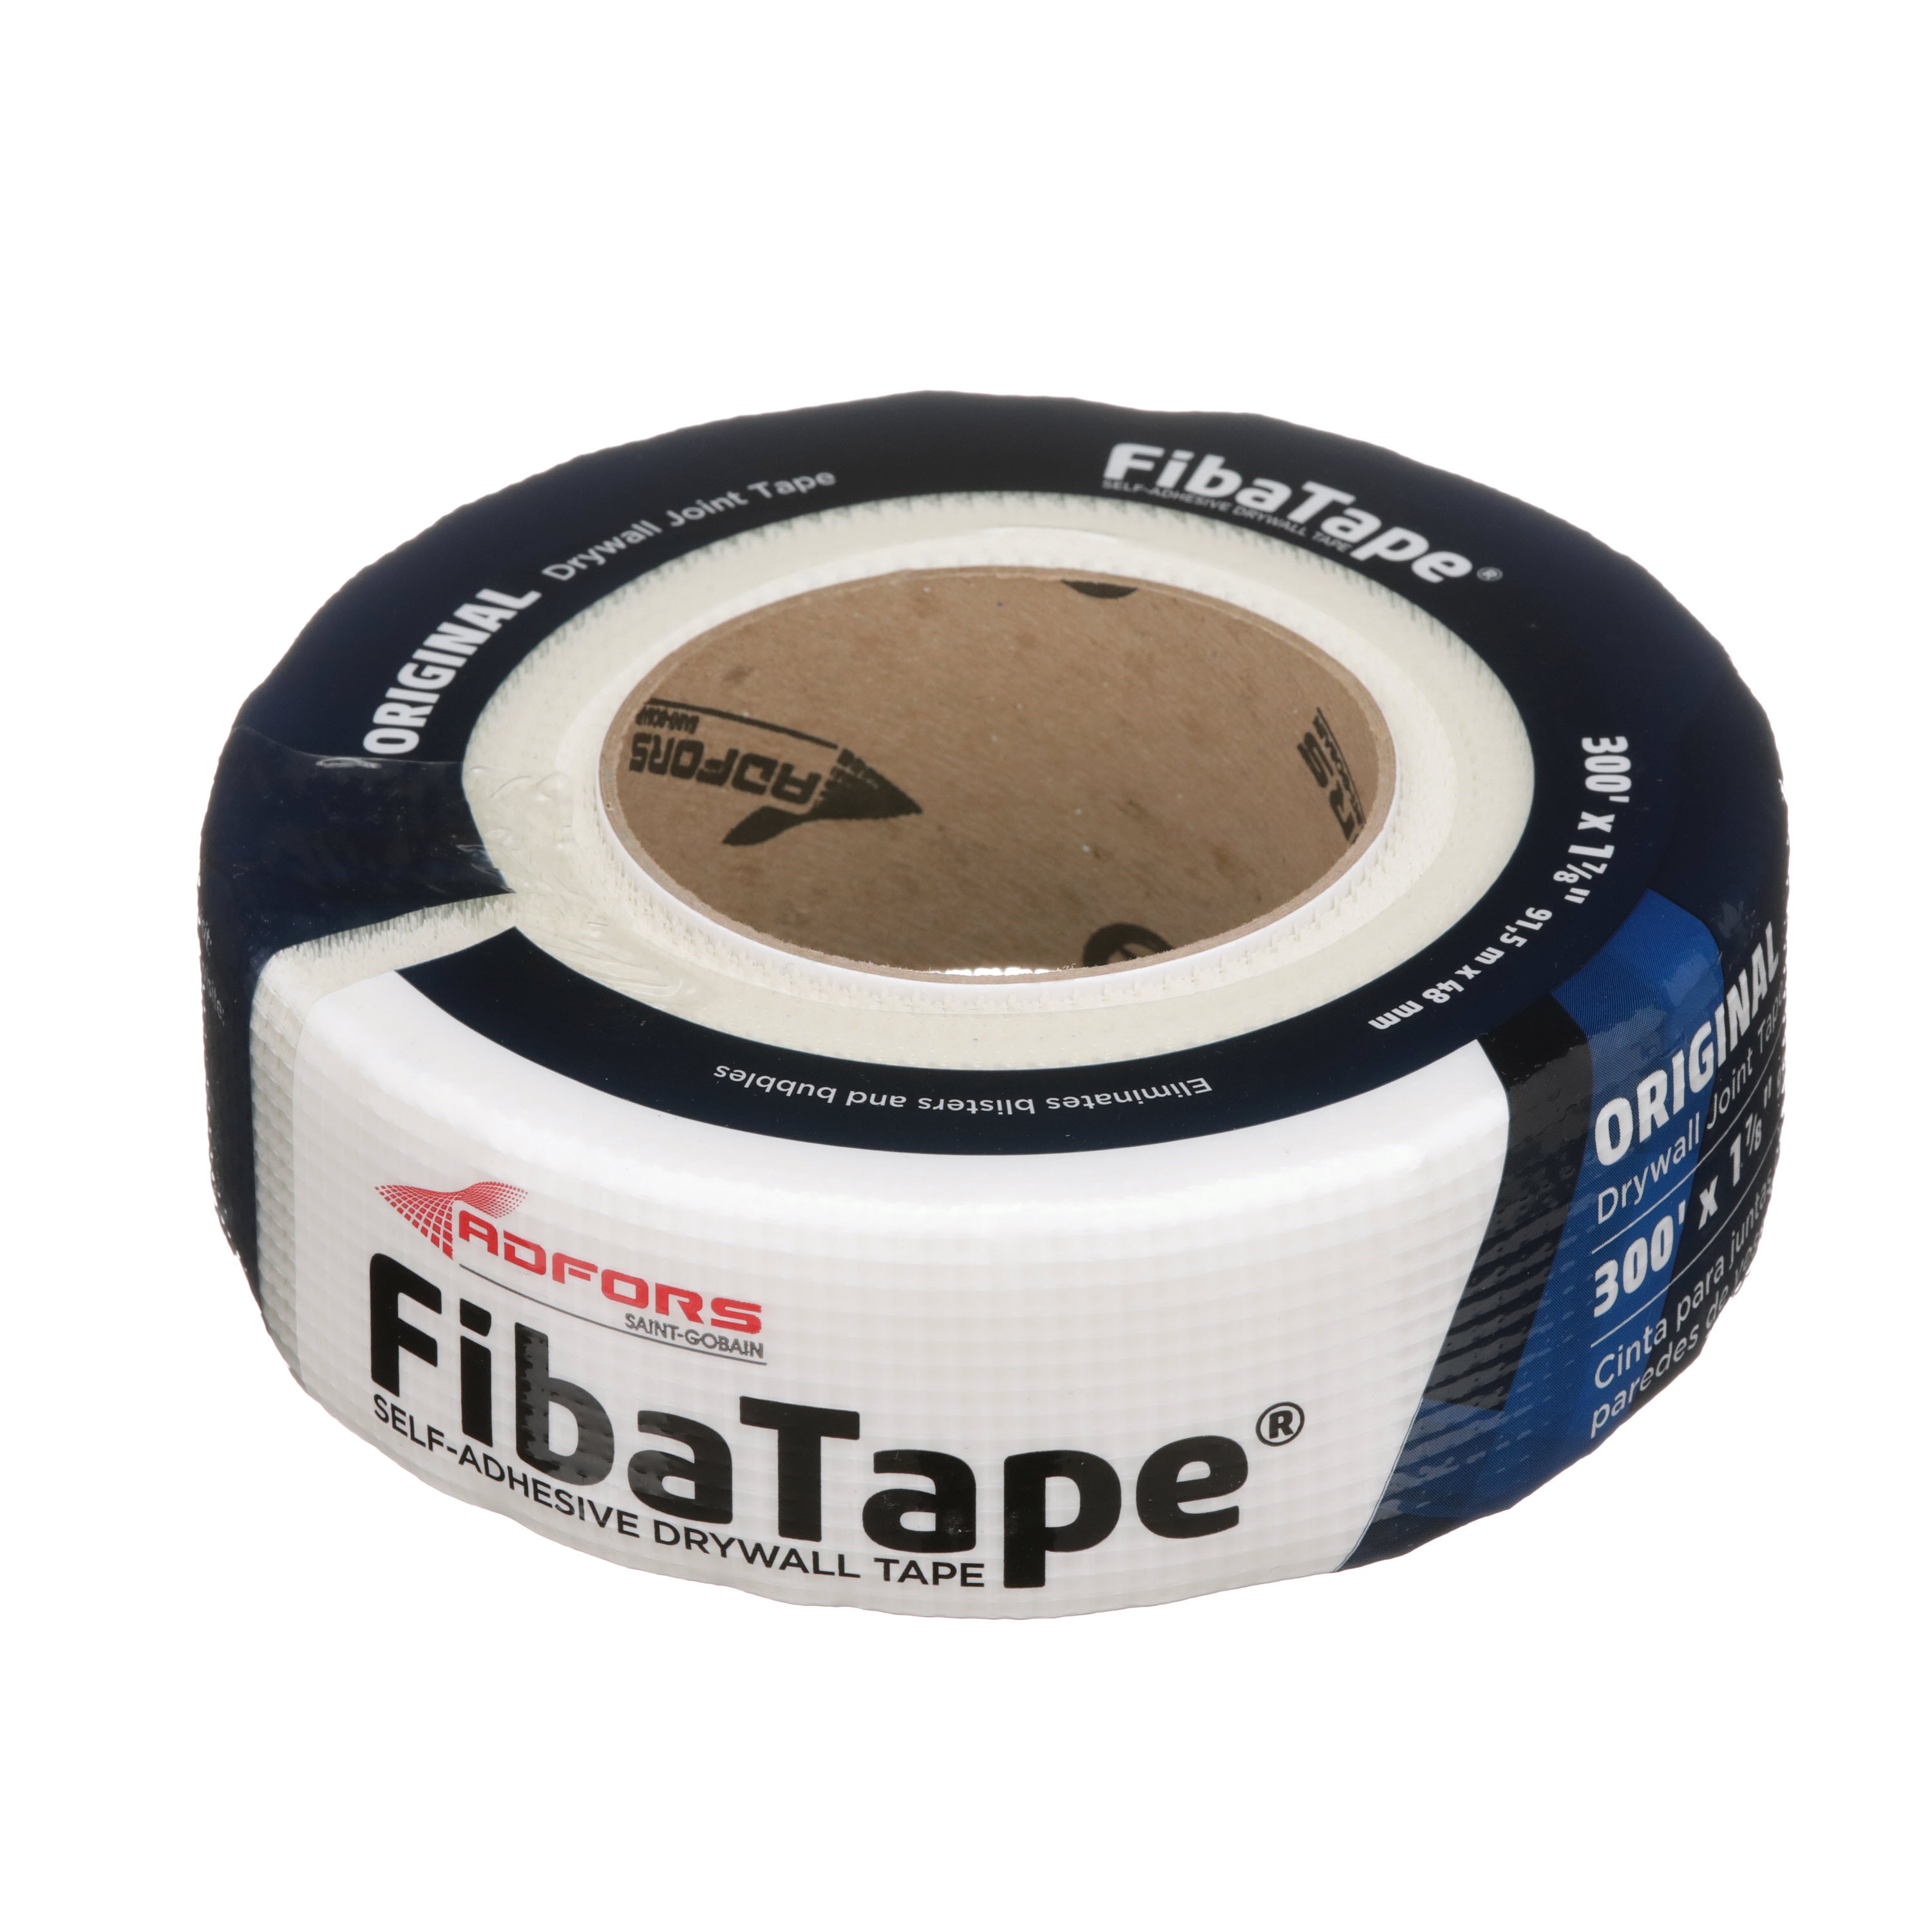 FibaTape FDW8666-U 2-3/8x250 Extra Strength Drywall Joint Tape